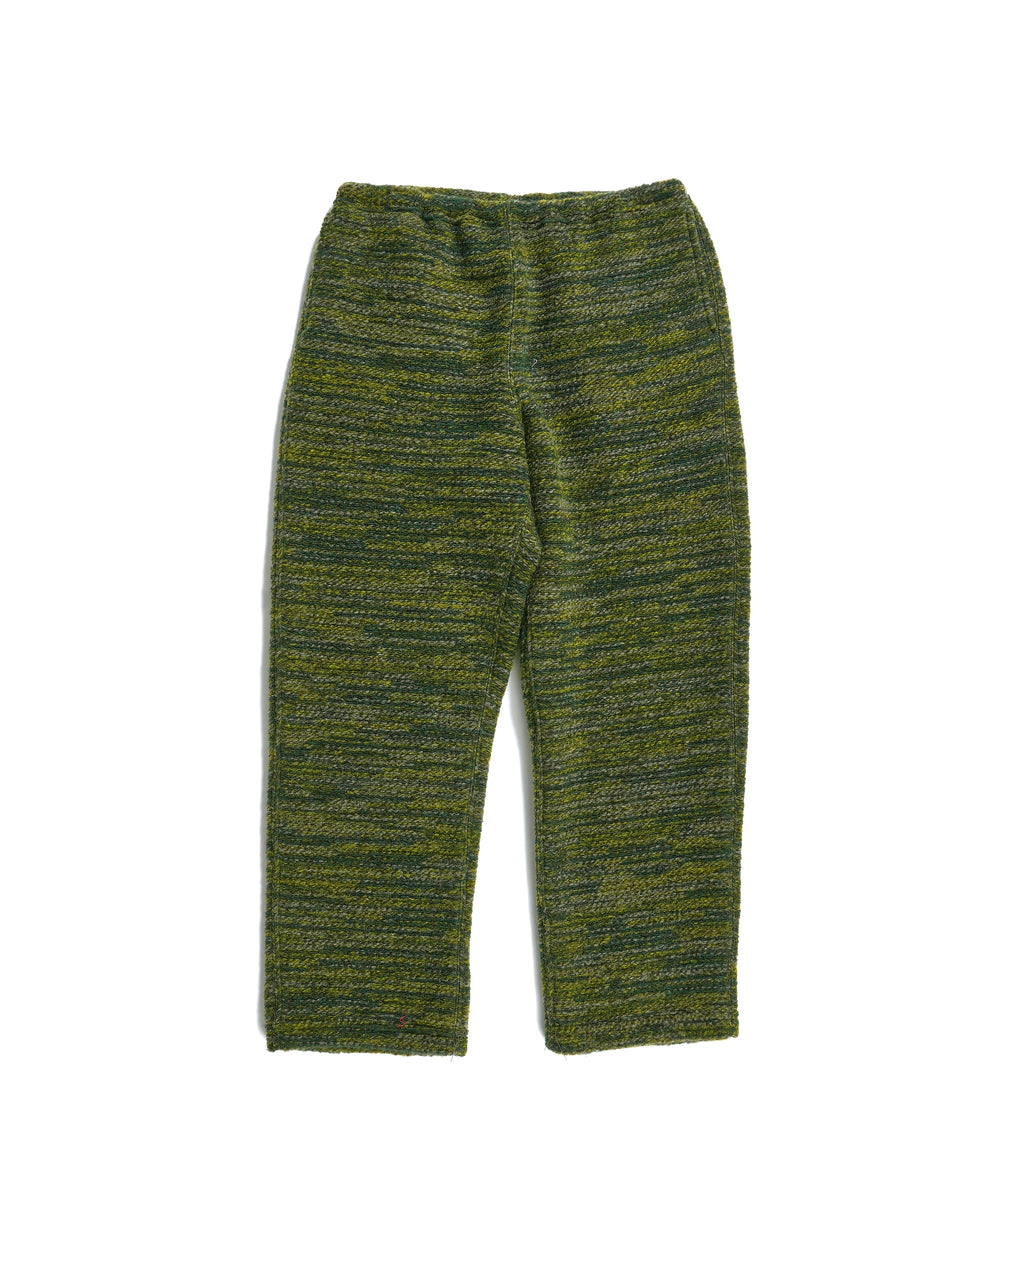 Engineered Garments STK Pant - Green Poly Wool Melange Knit